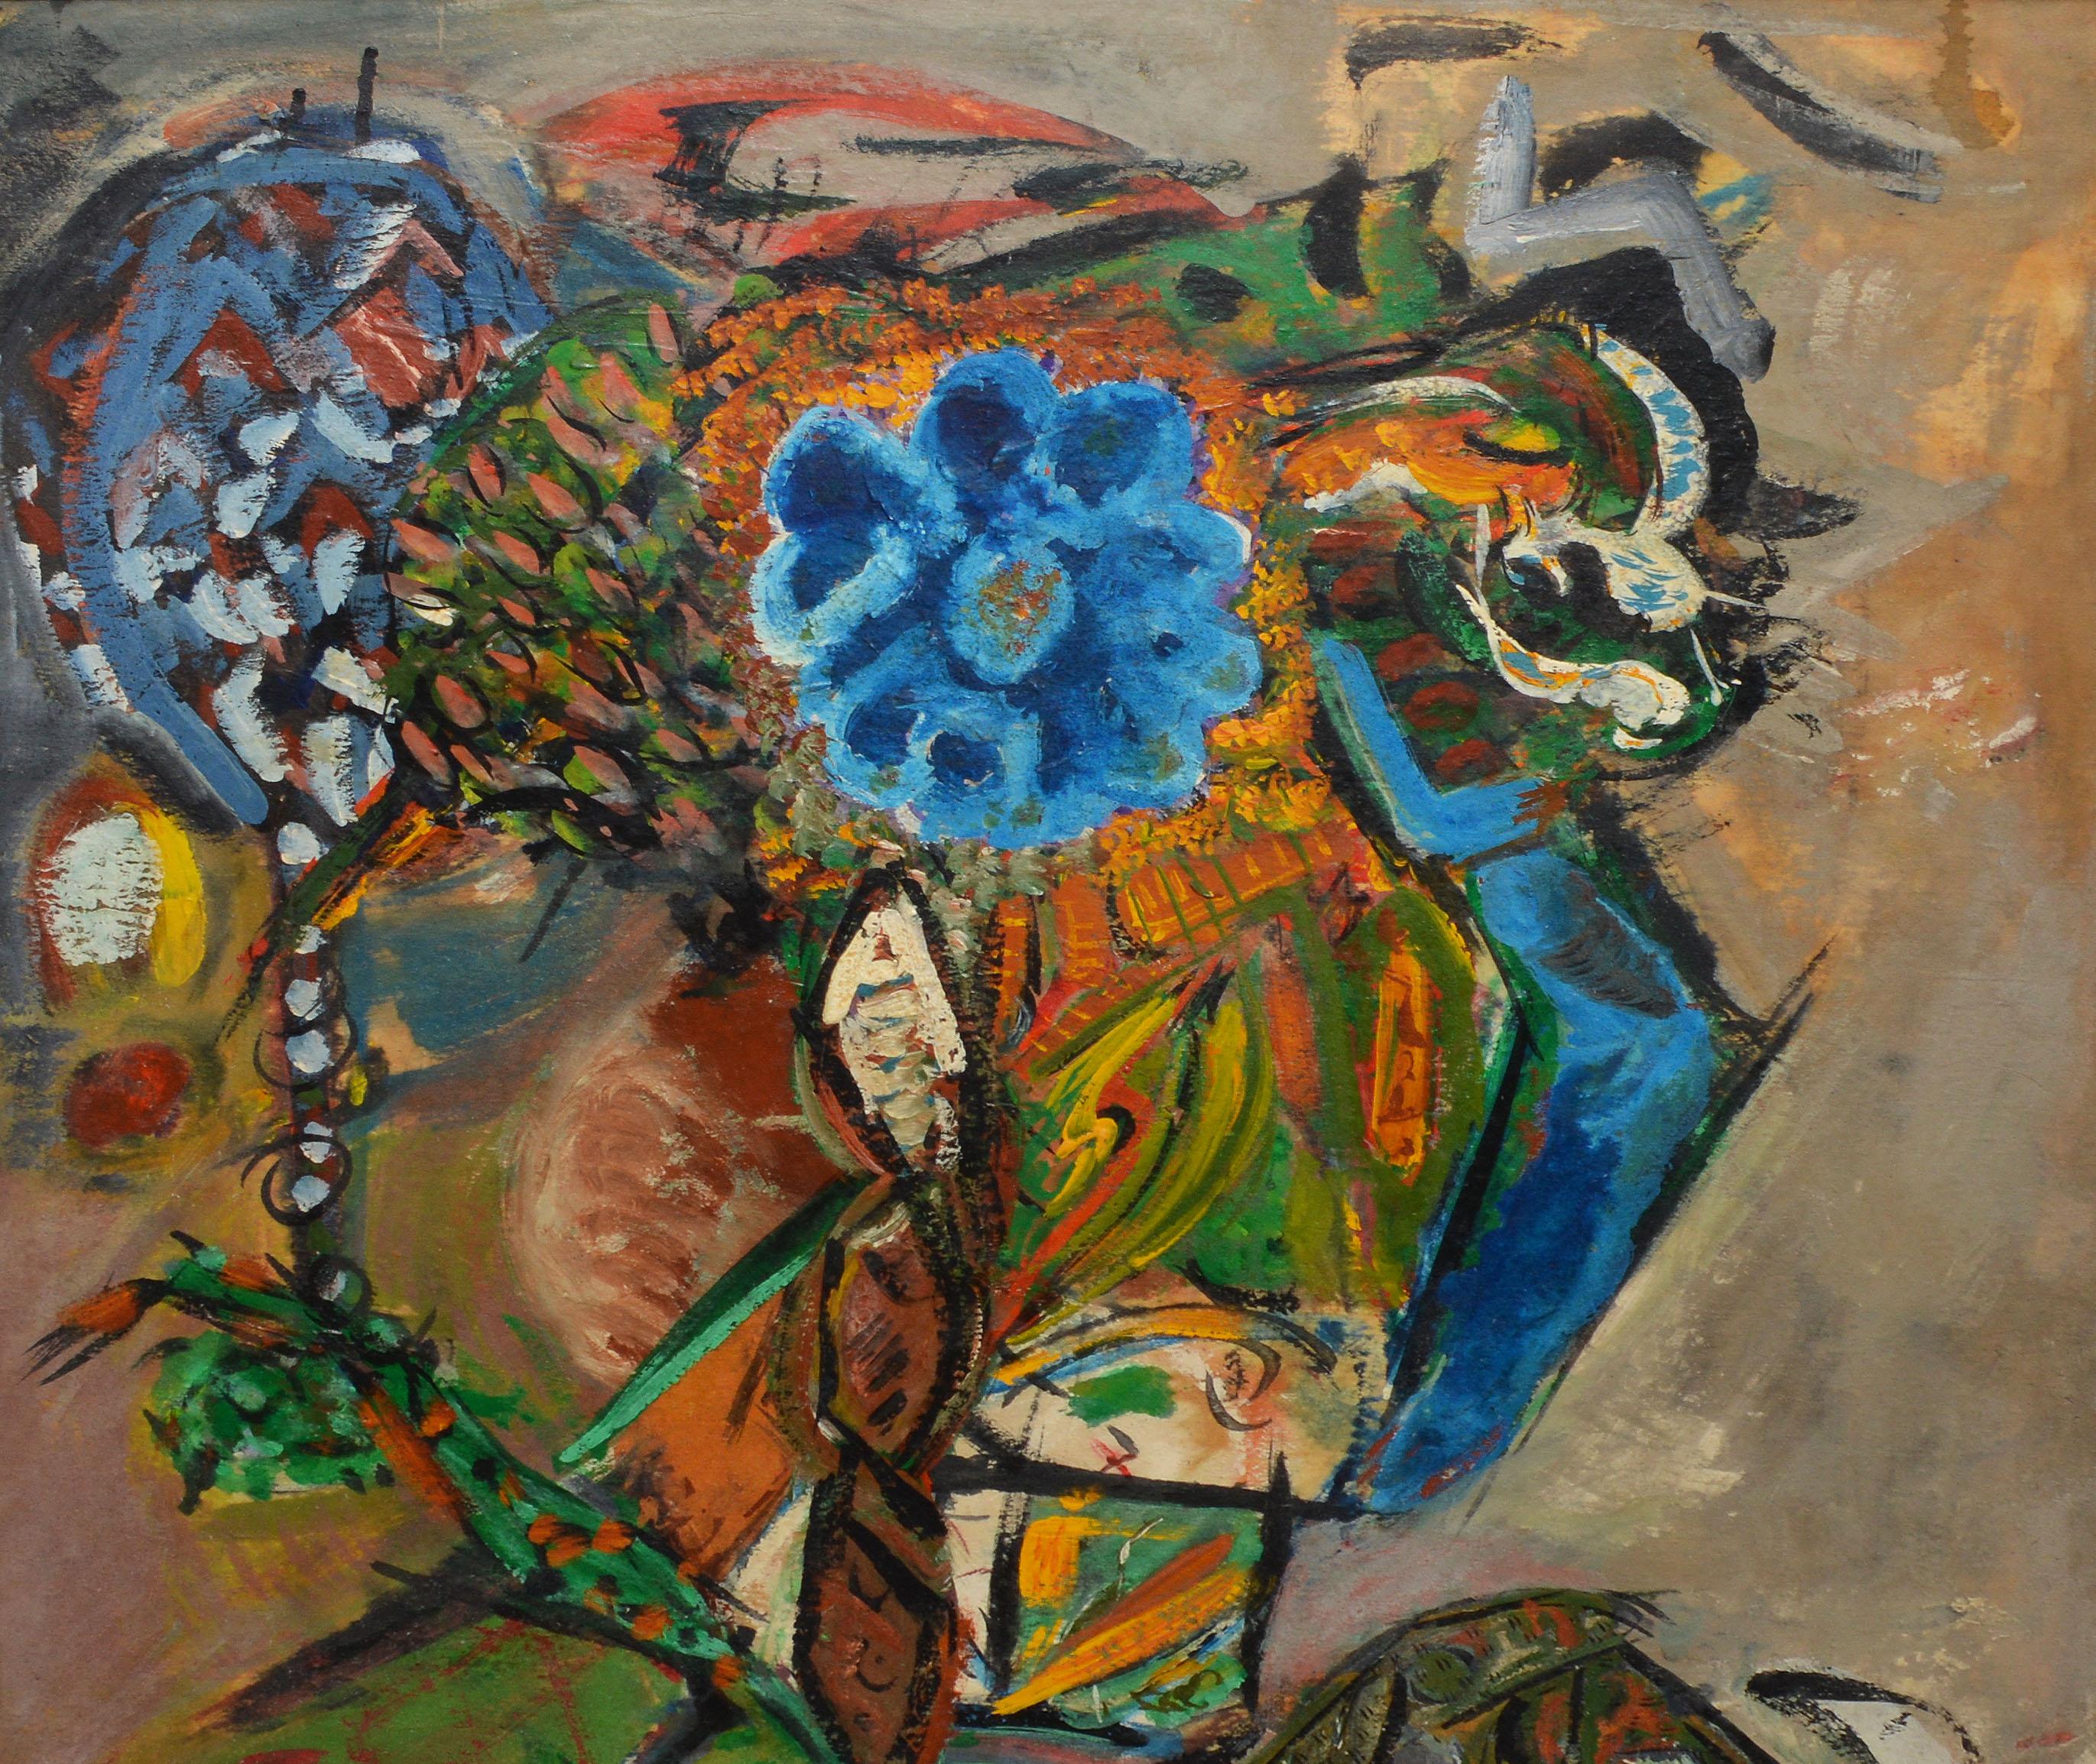 New York School Abstract Expressionist Flower Still Life Painting, William Scher 1